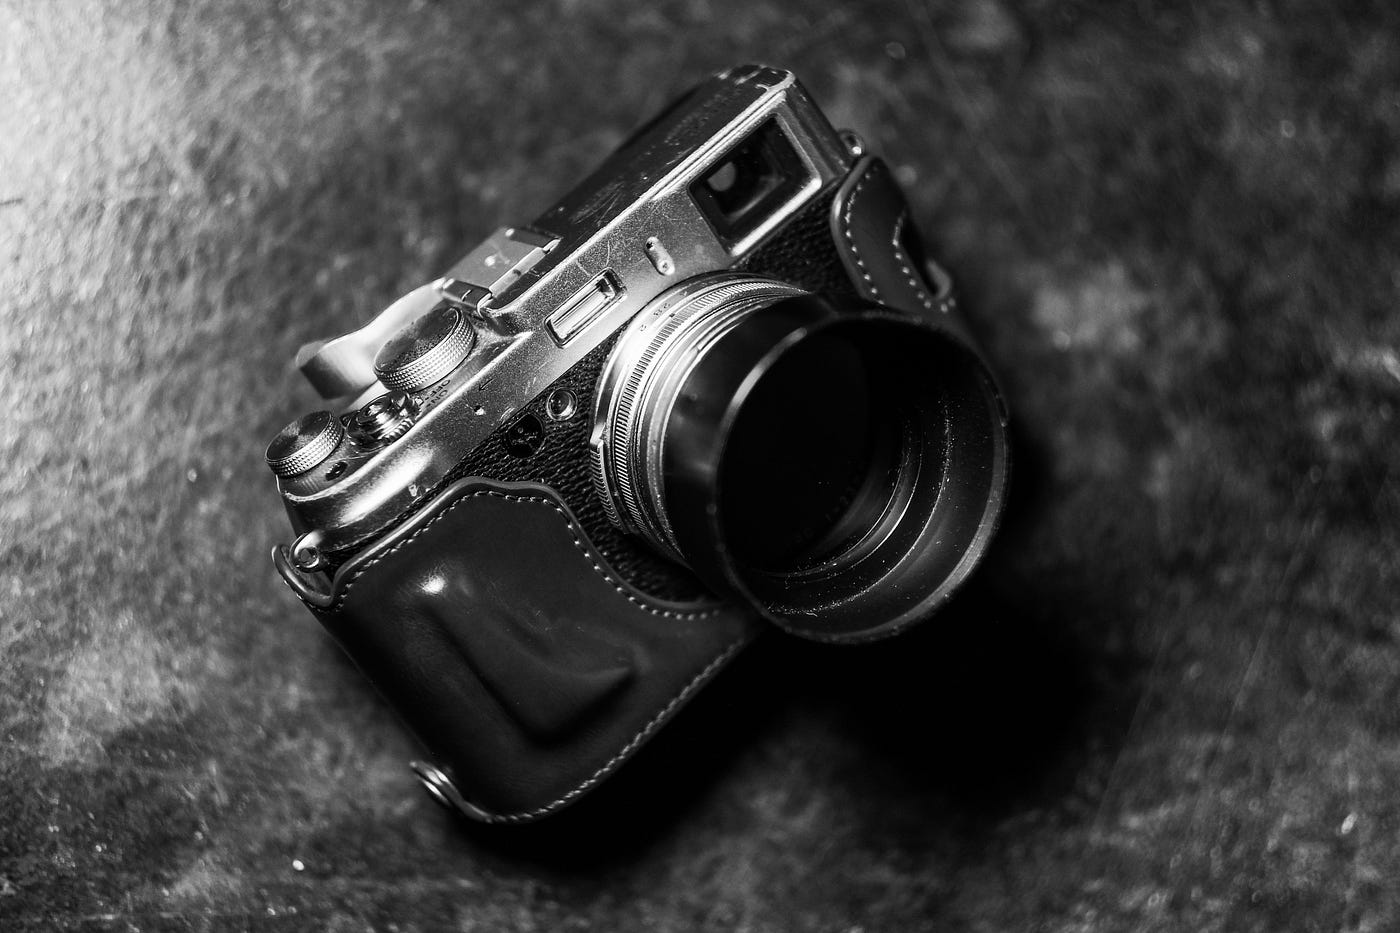 gelijktijdig Dwingend Giet The Life of a Fujifilm x100 Original | by Chris Ferr | Medium